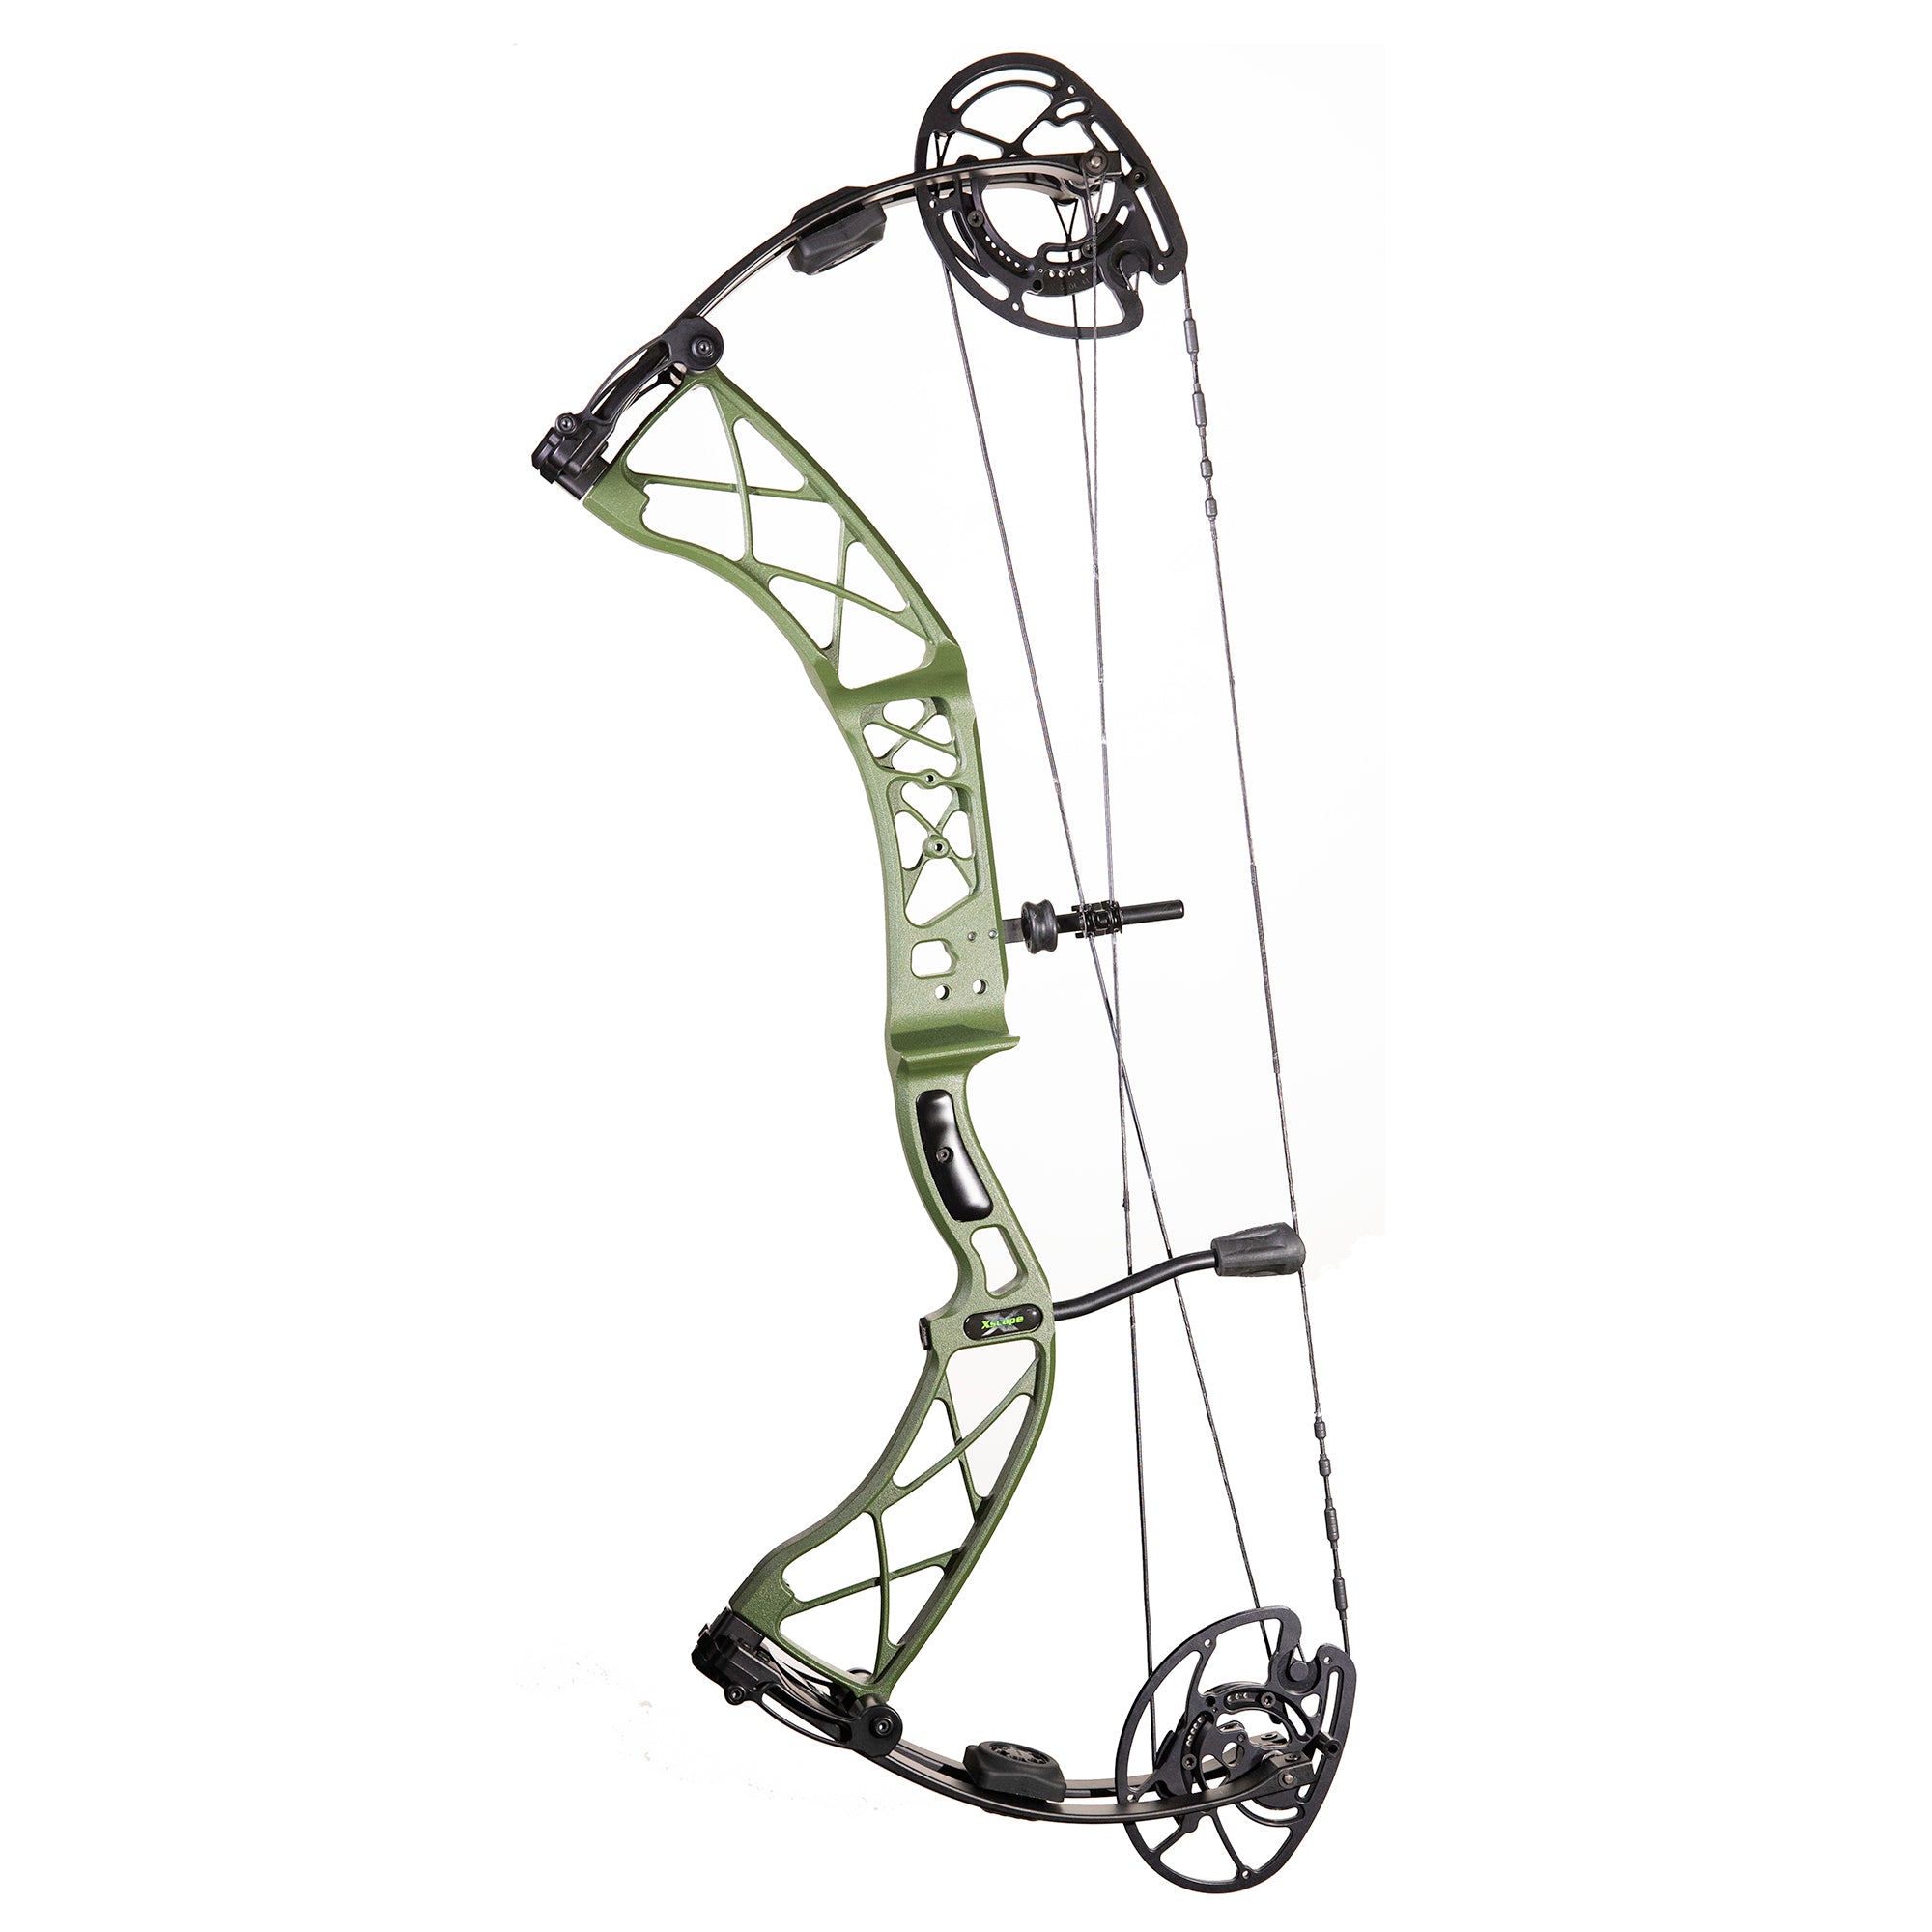 Xpedition Archery XSC OPS60 Xscape Adjustable Bow w/ 60 Pound Draw, Camouflage